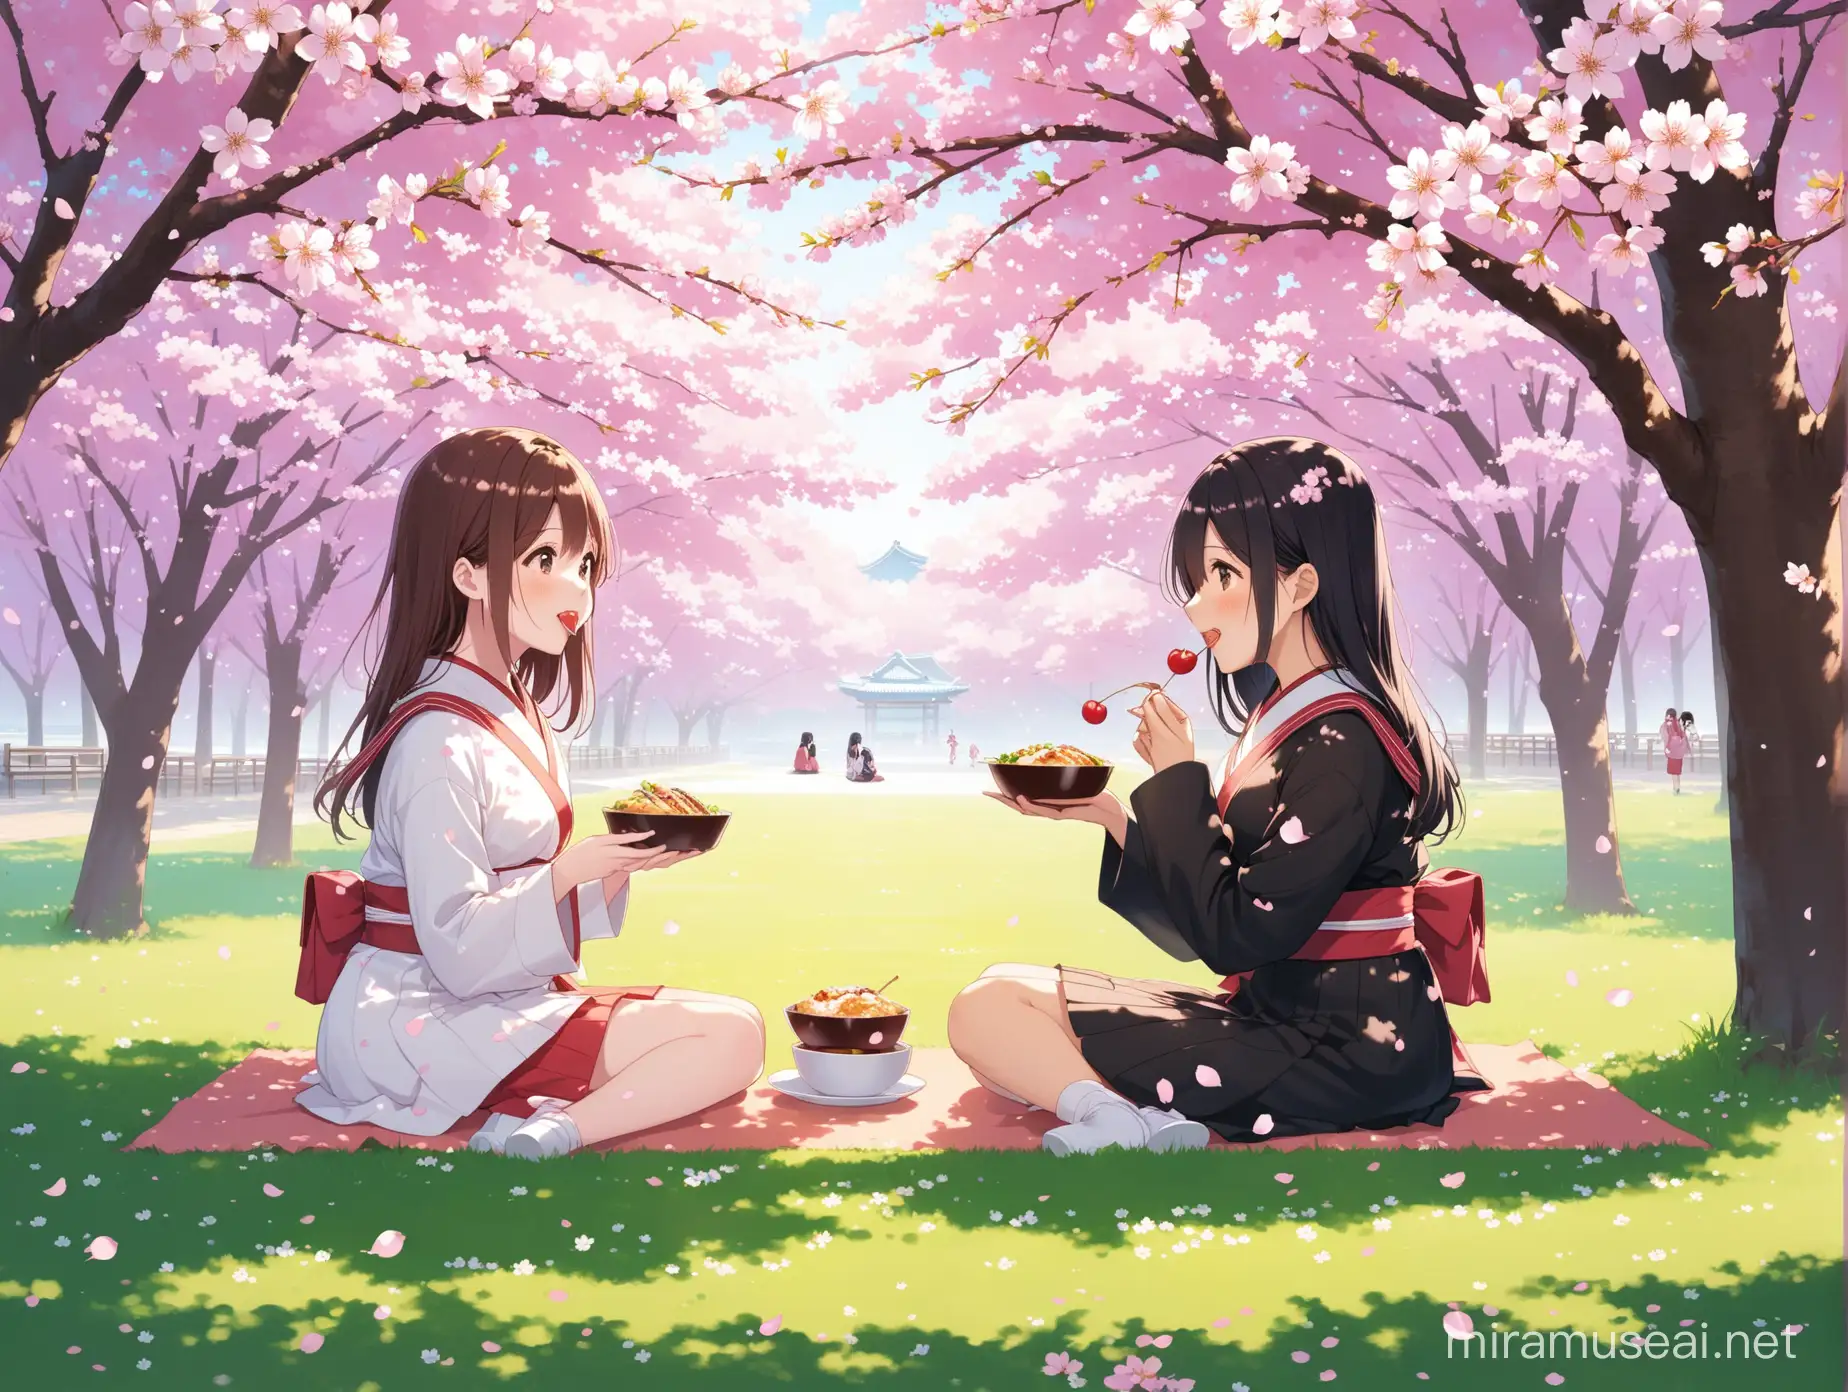 Girls Enjoying Spring Picnic Beneath Blossoming Cherry Trees